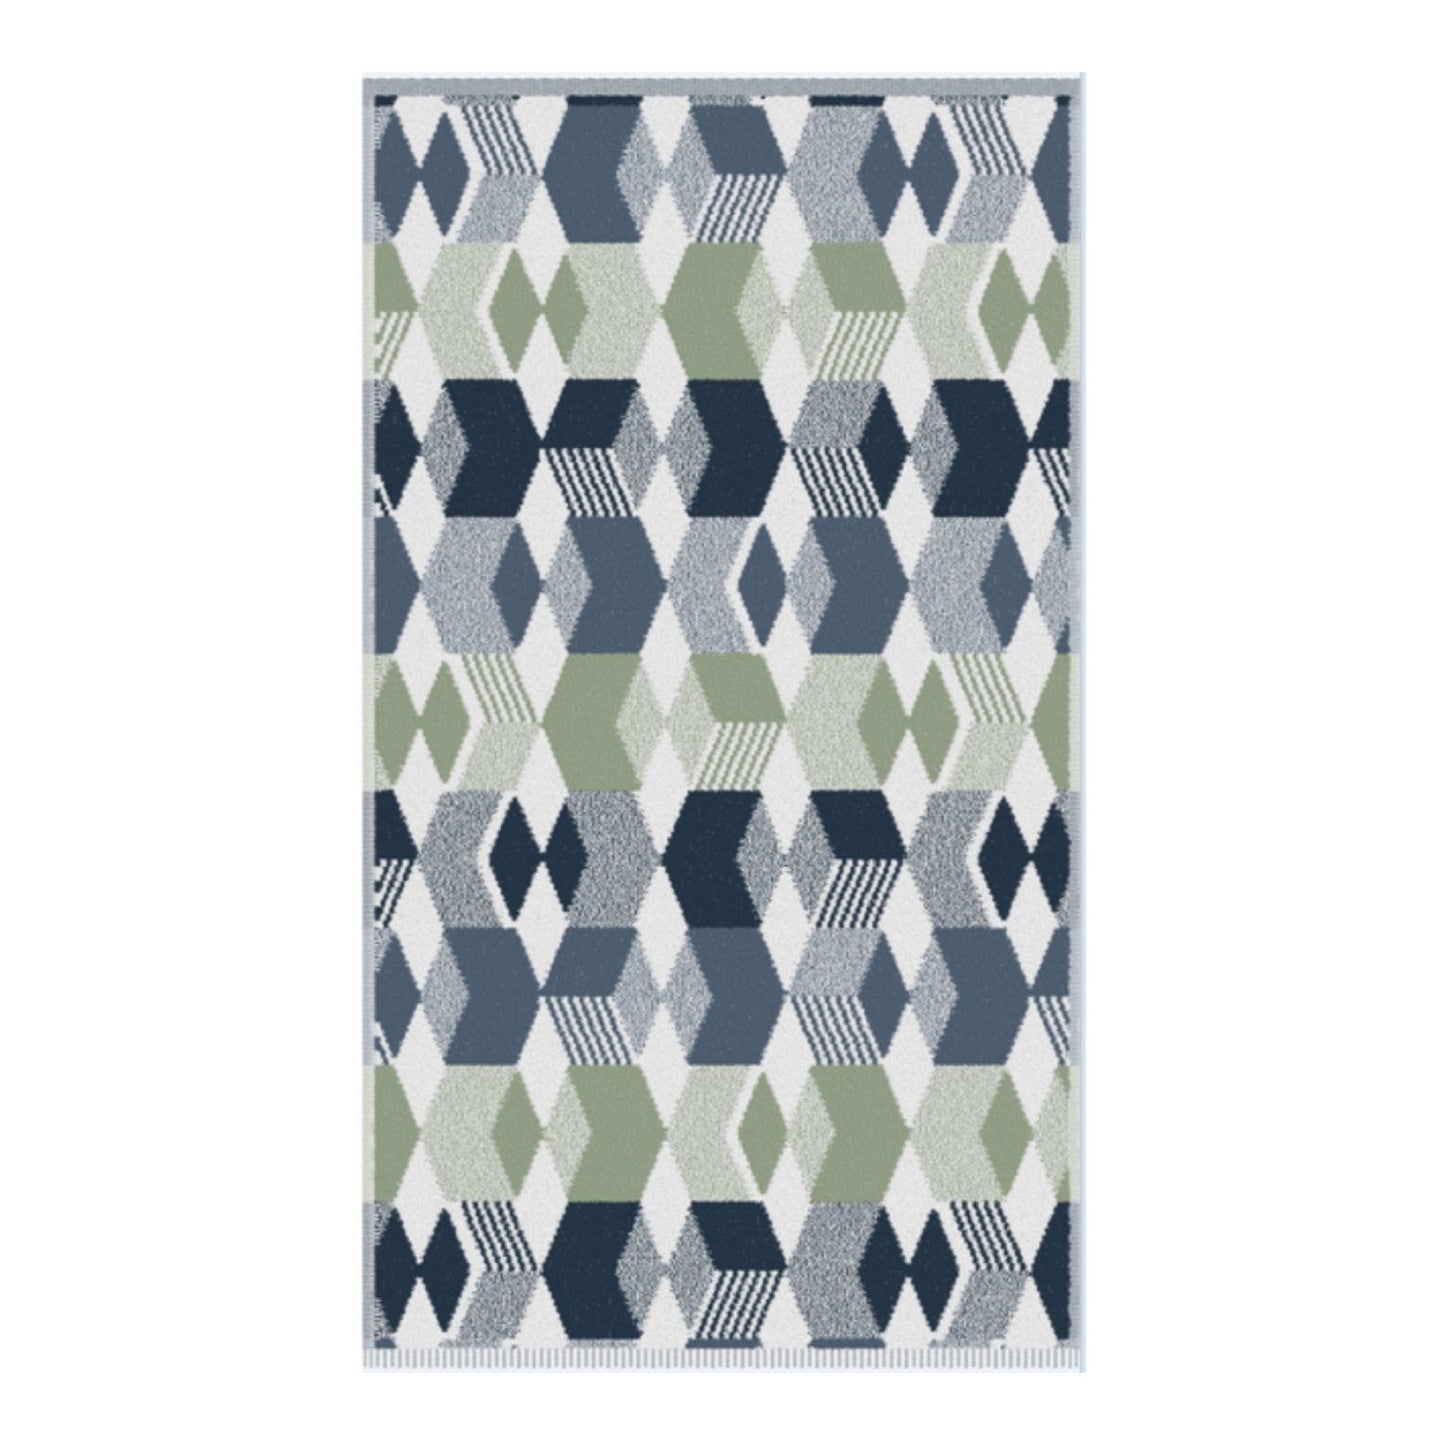 Hexagon Navy Geometric 550gsm Cotton Towels